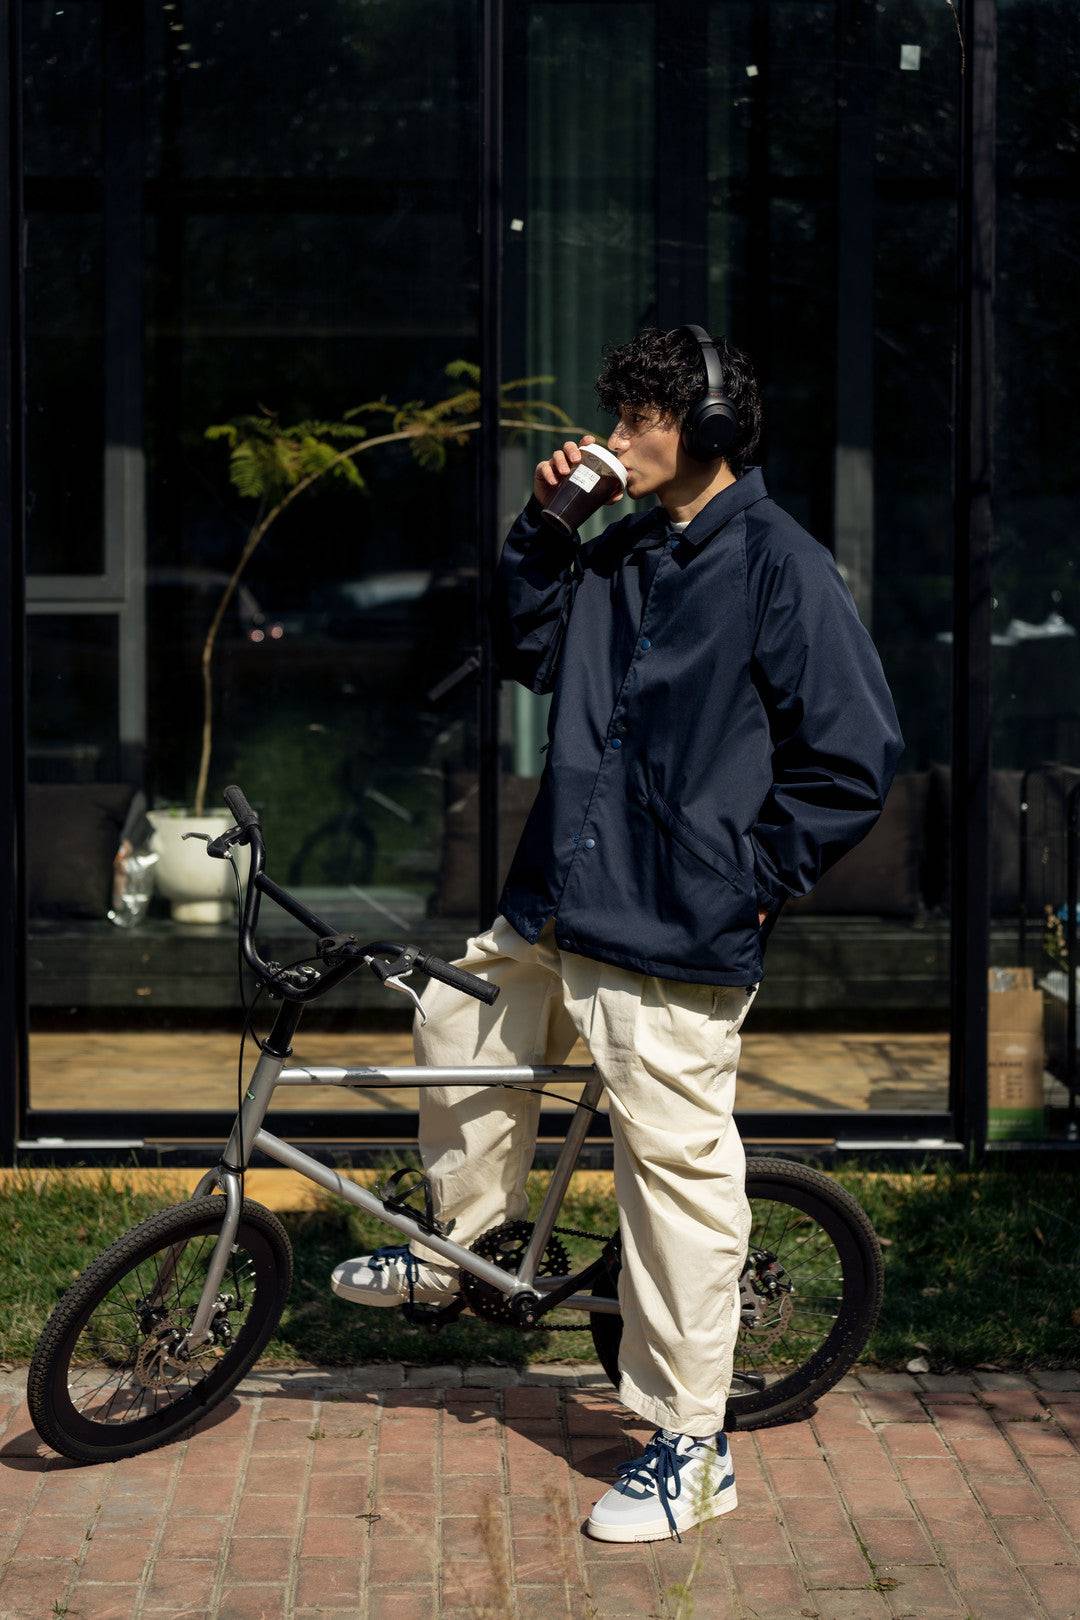 Fuel Jacket Japanese style wind breaker - Teflon fabric protector